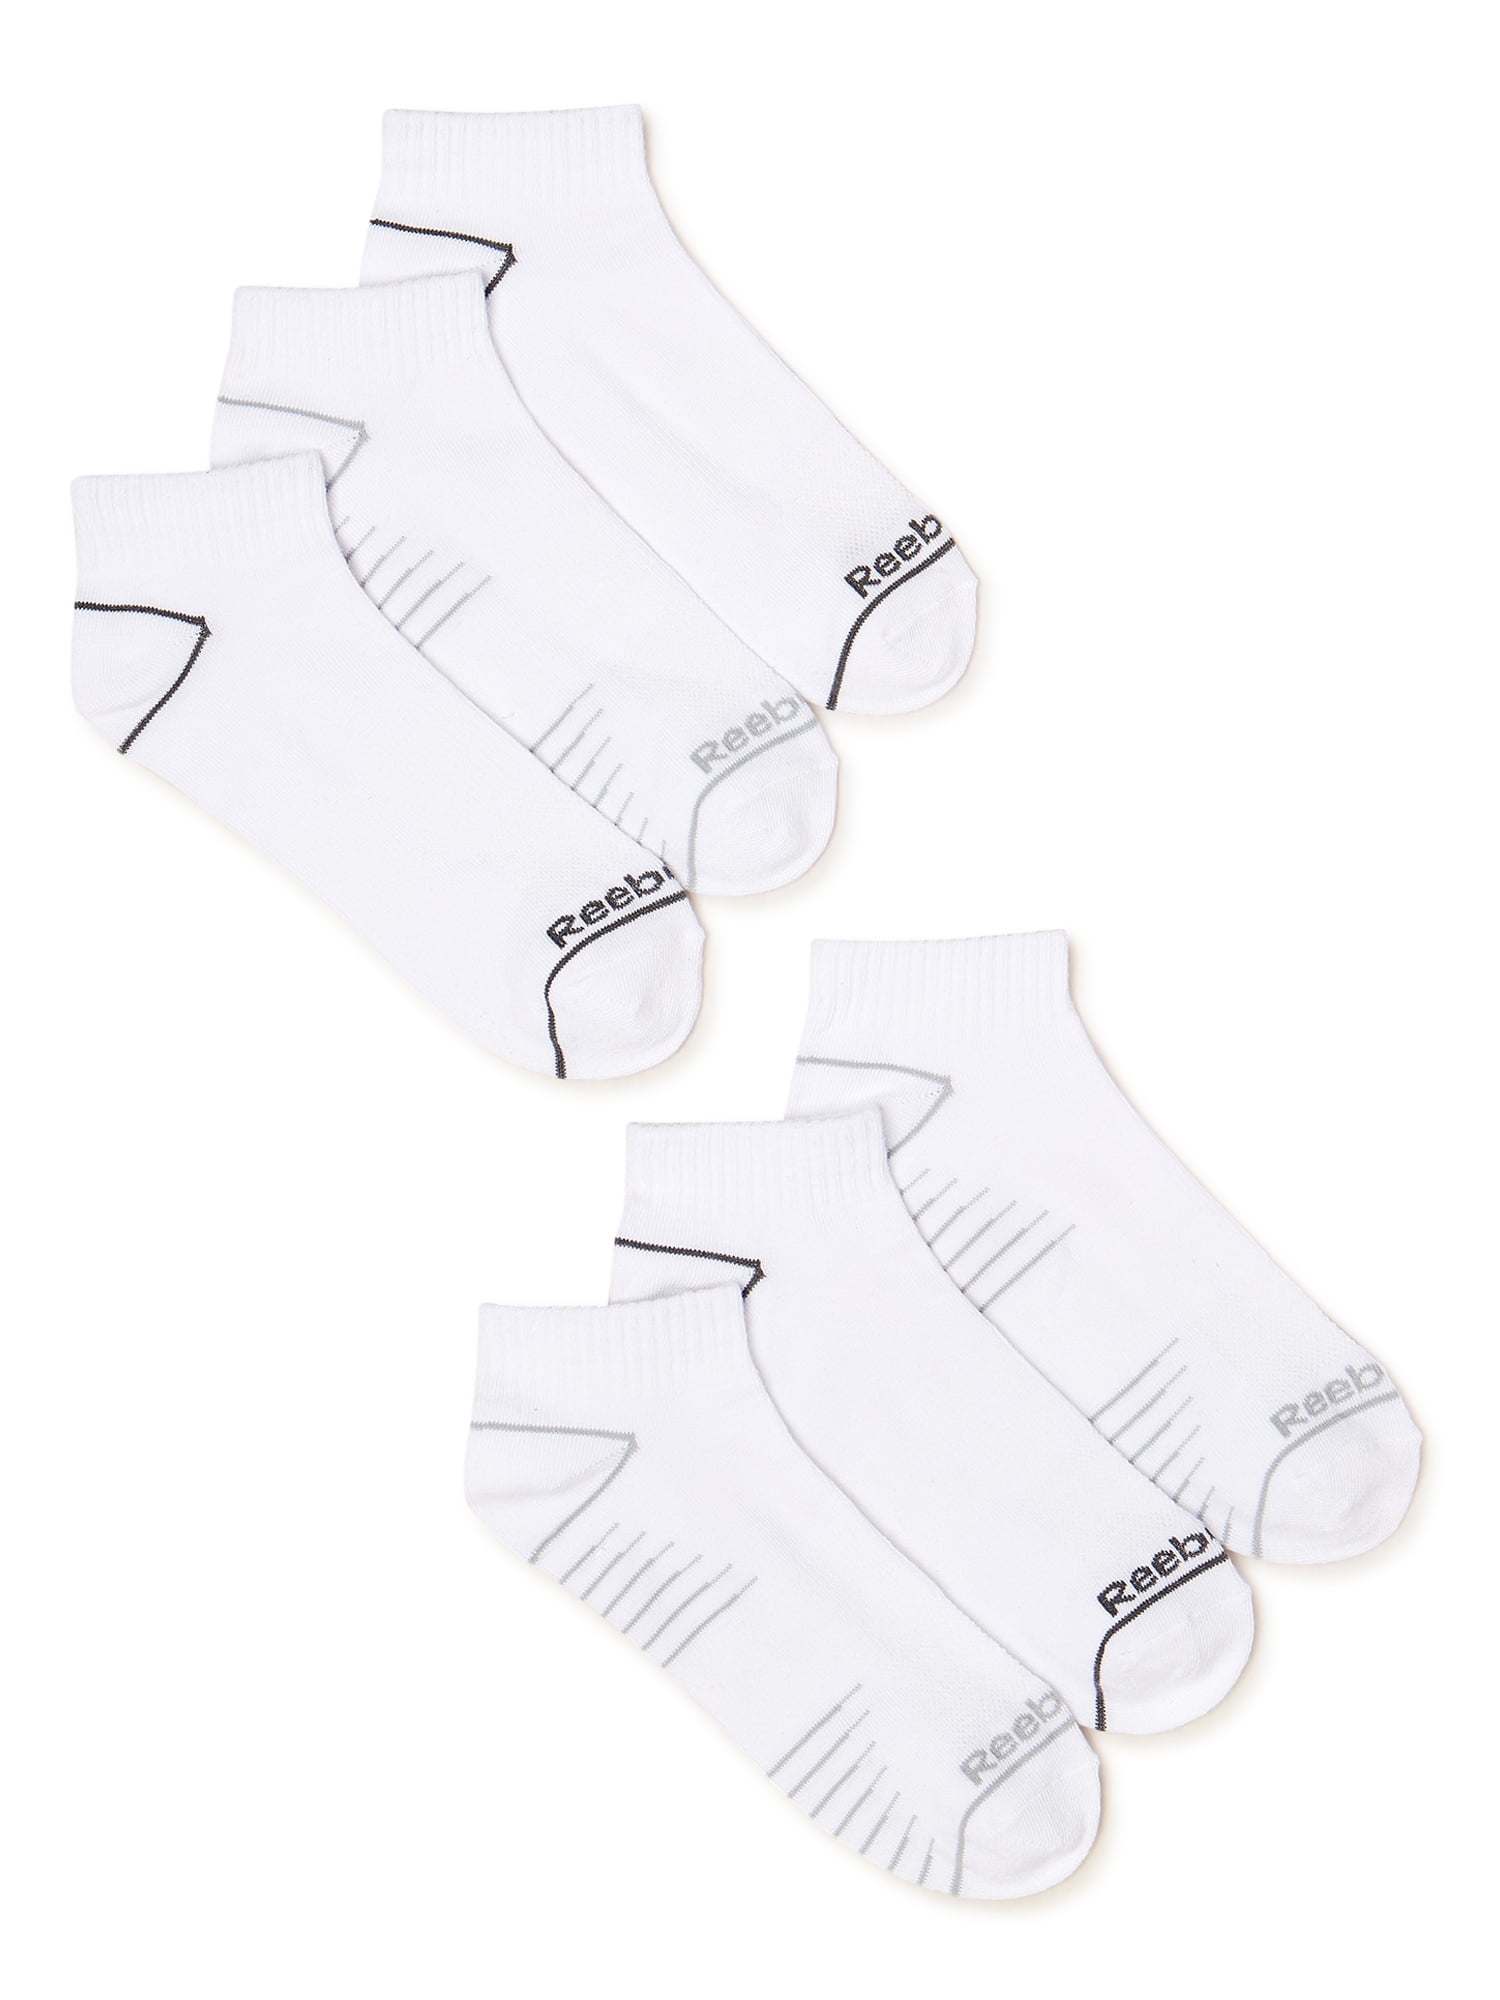 Reebok Men's Pro Series Flatknit Ankle Socks, 6-Pack